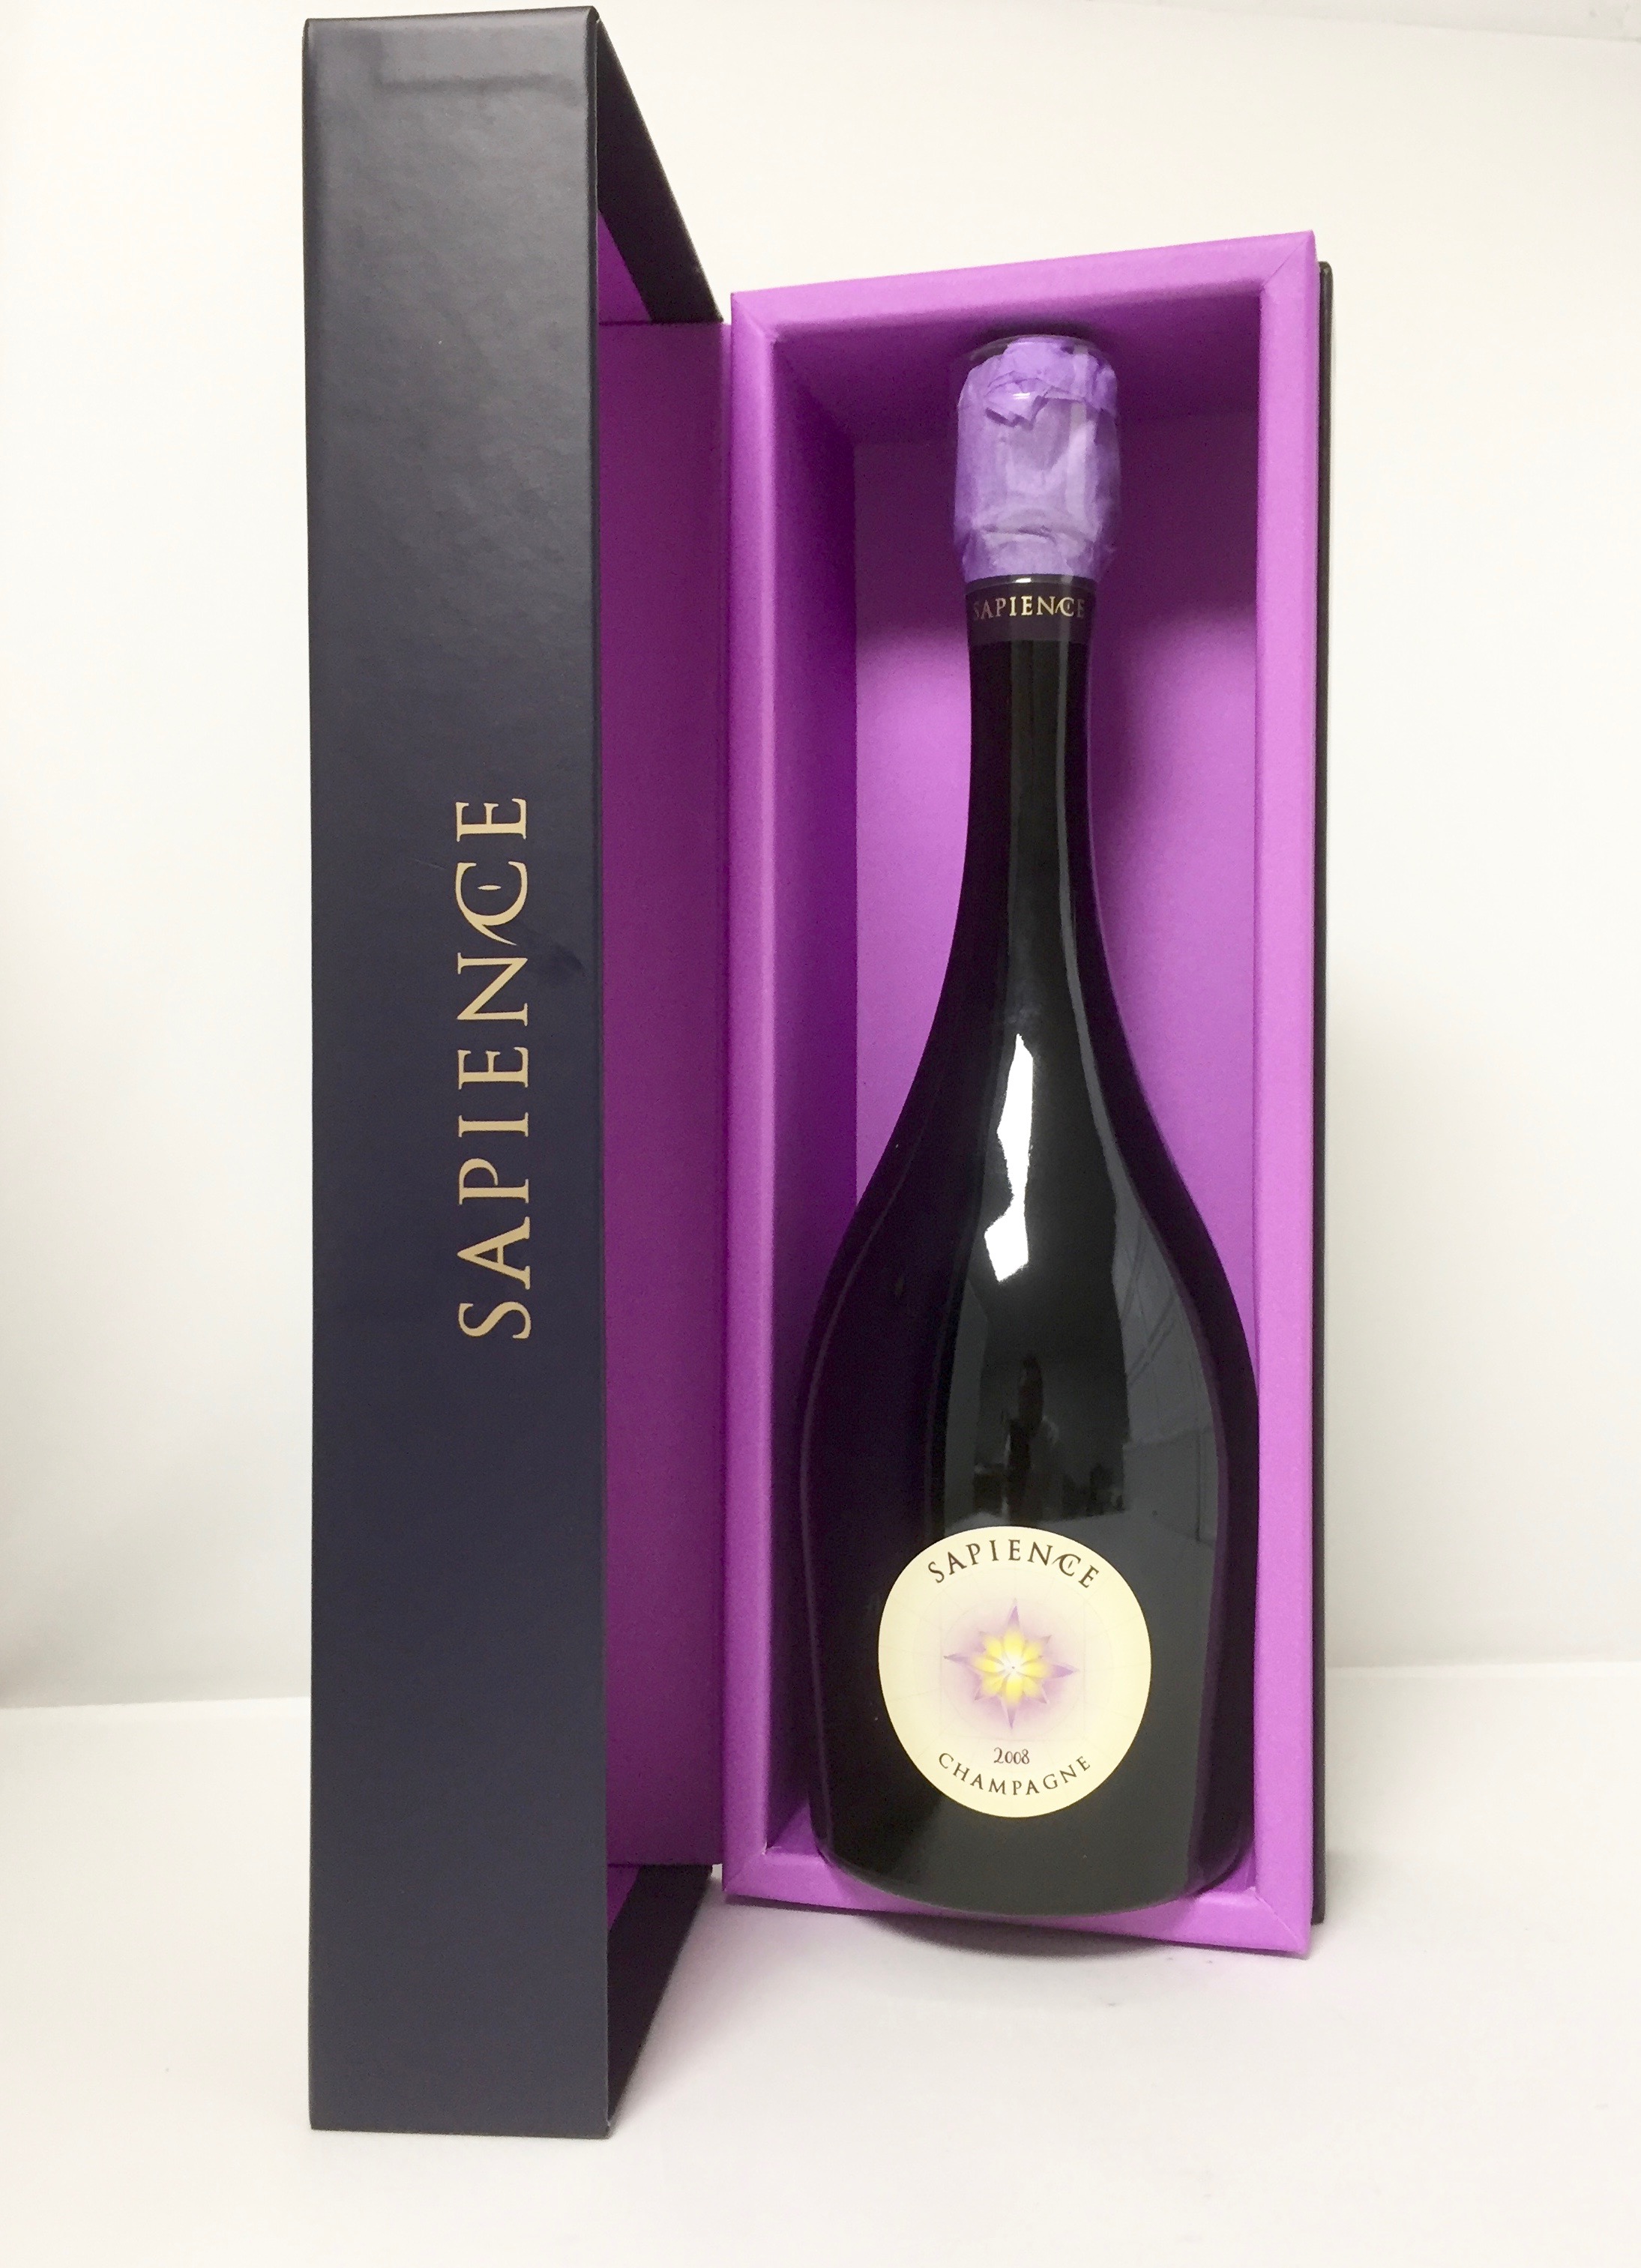 2010 Marguet premier Cru Brut Champagne Sapience image